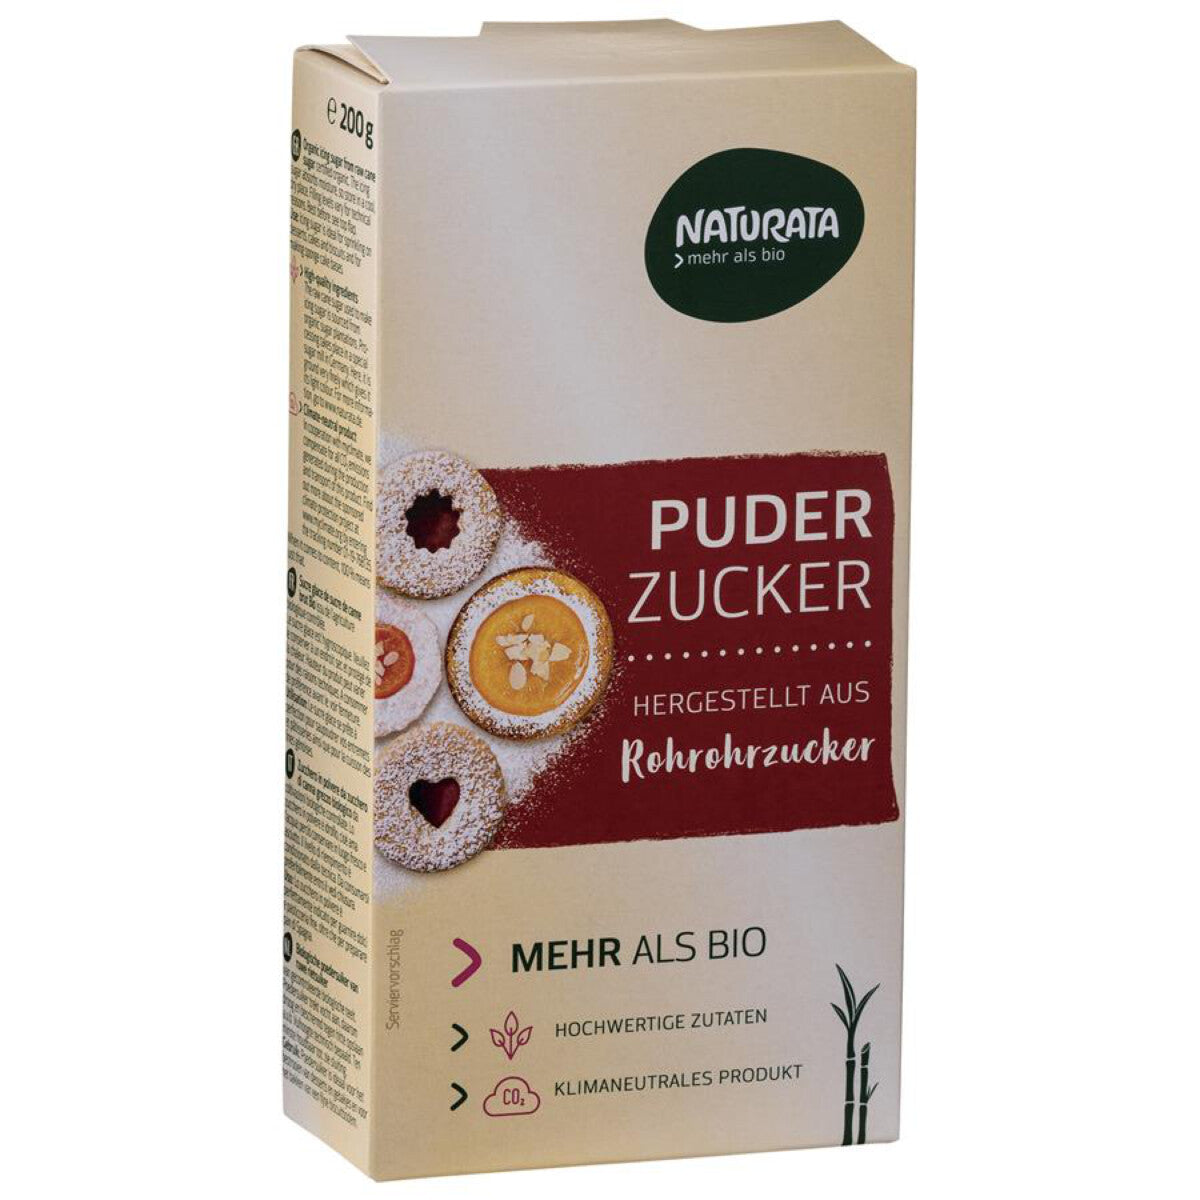 NATURATA Puderzucker aus Roh-Rohrzucker - 200 g